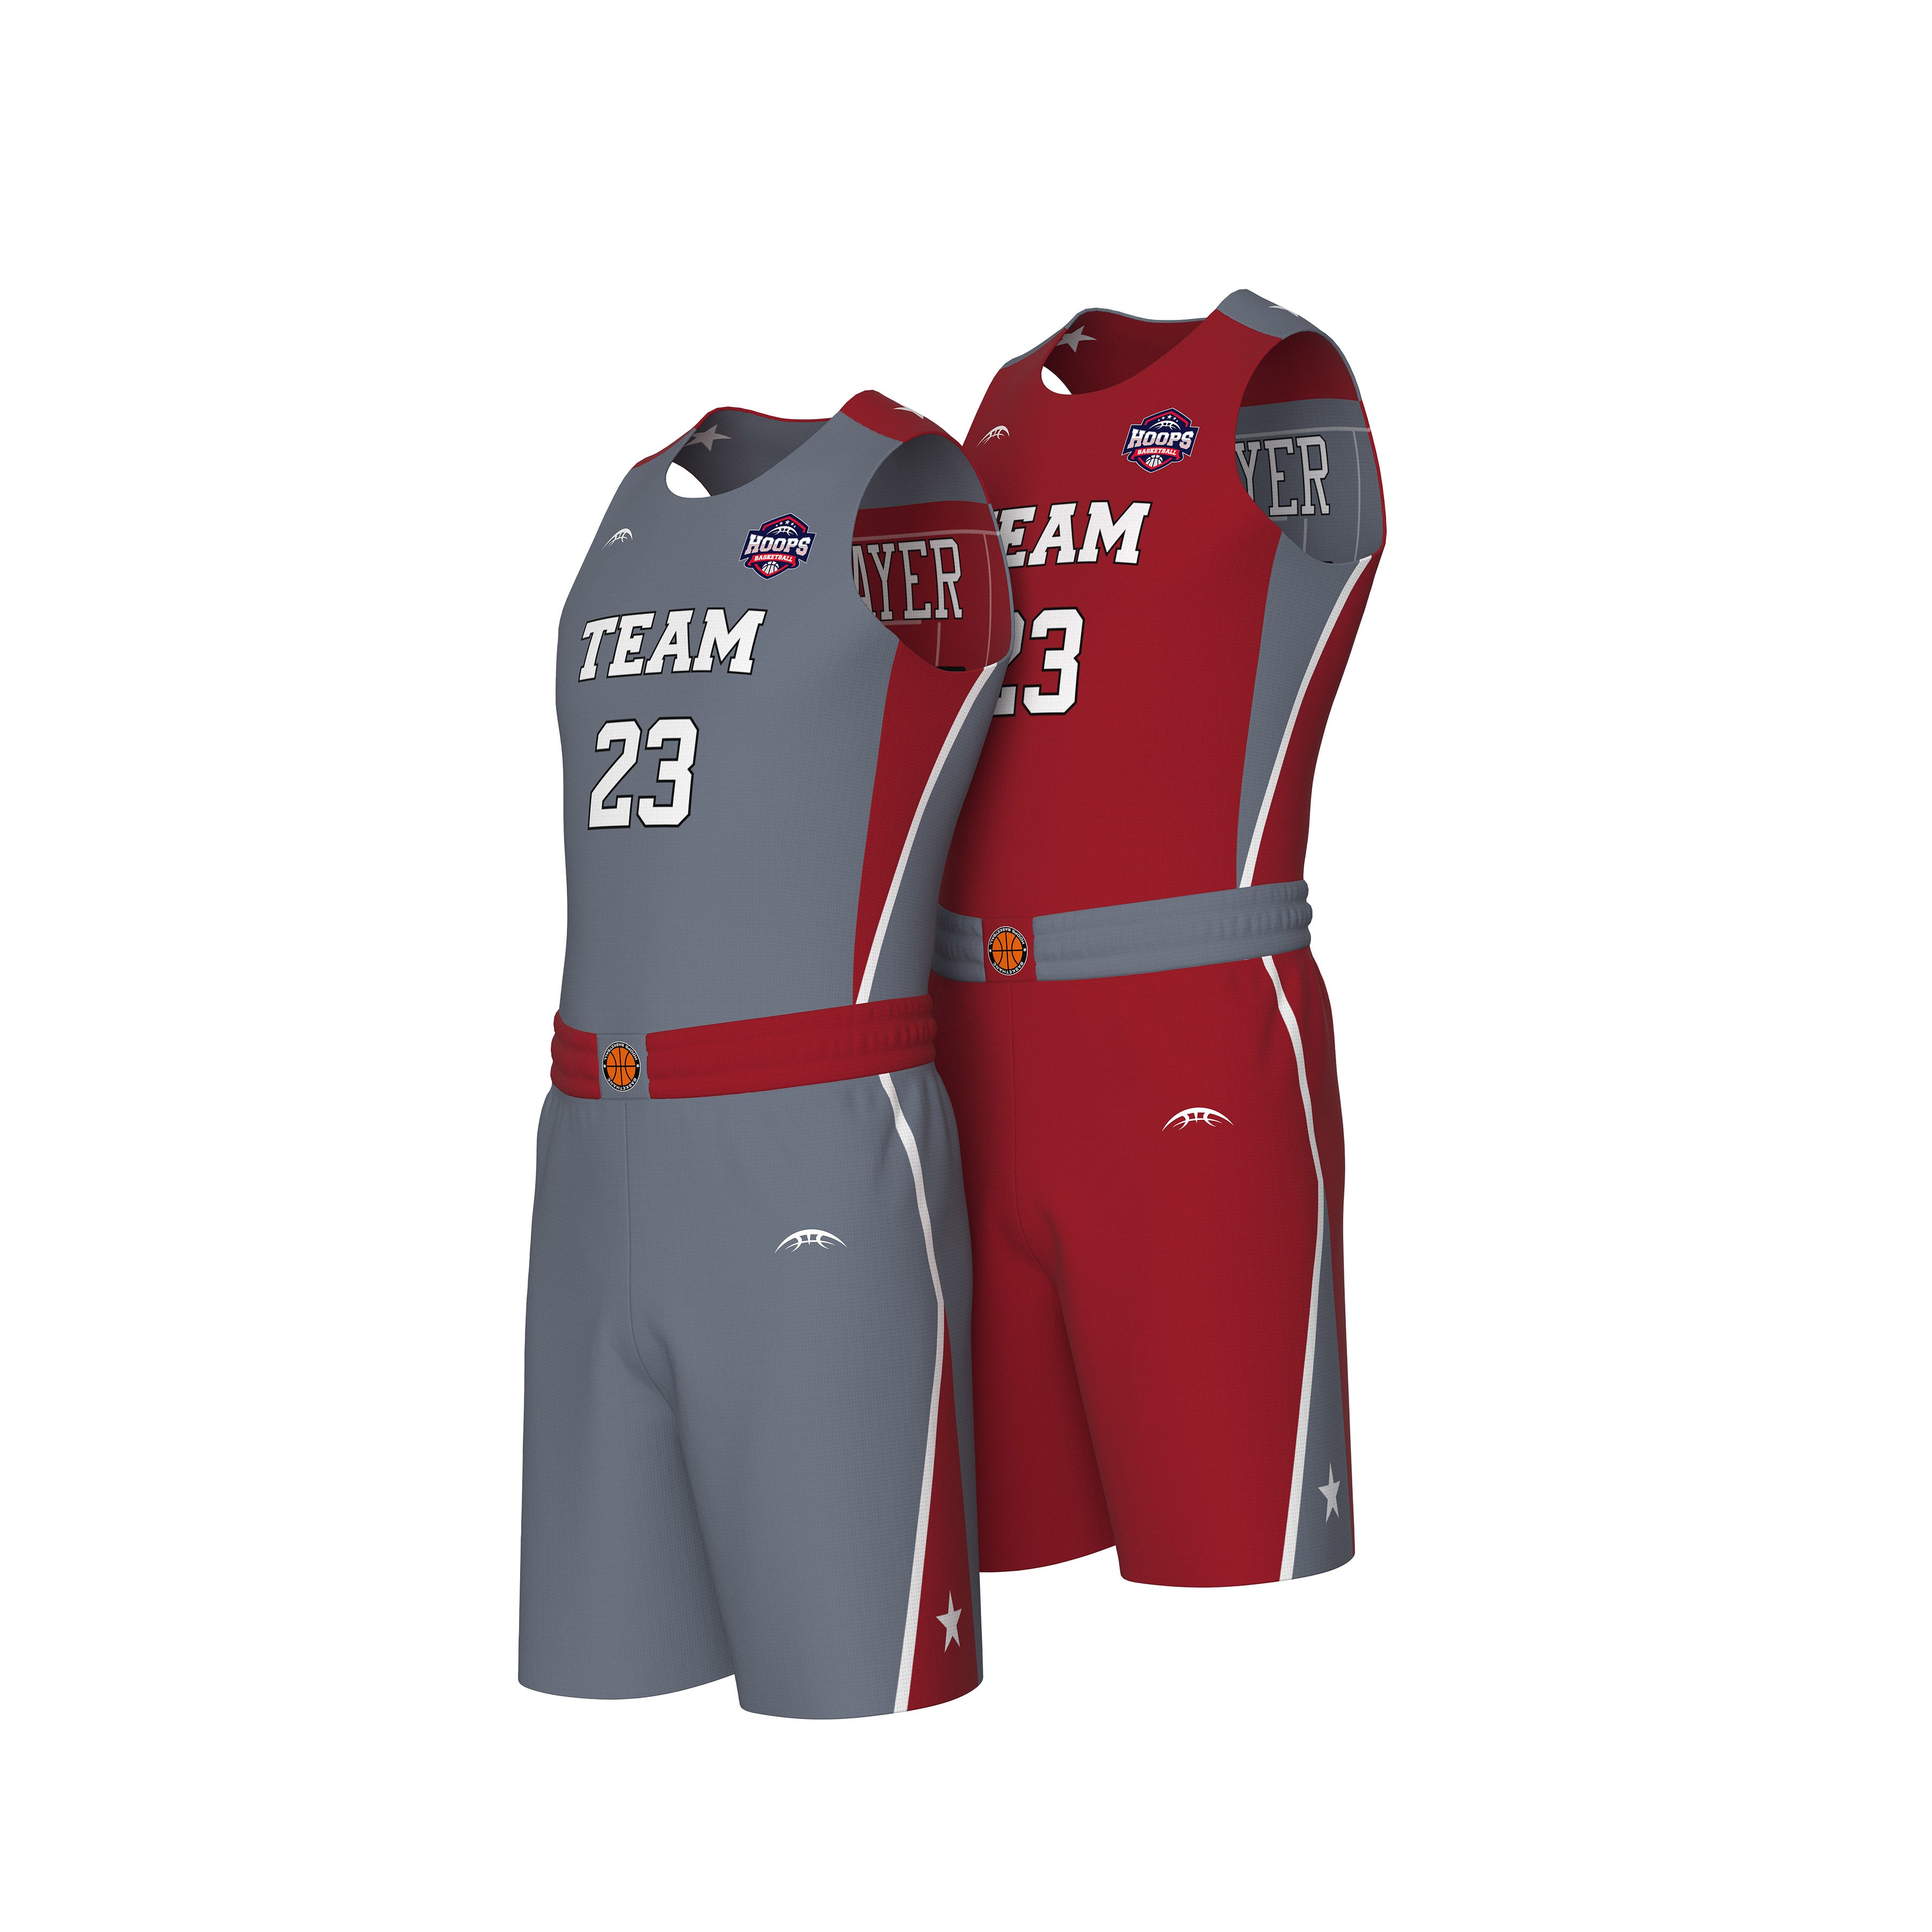 Design Reversible Basketball Jerseys & Shorts Online